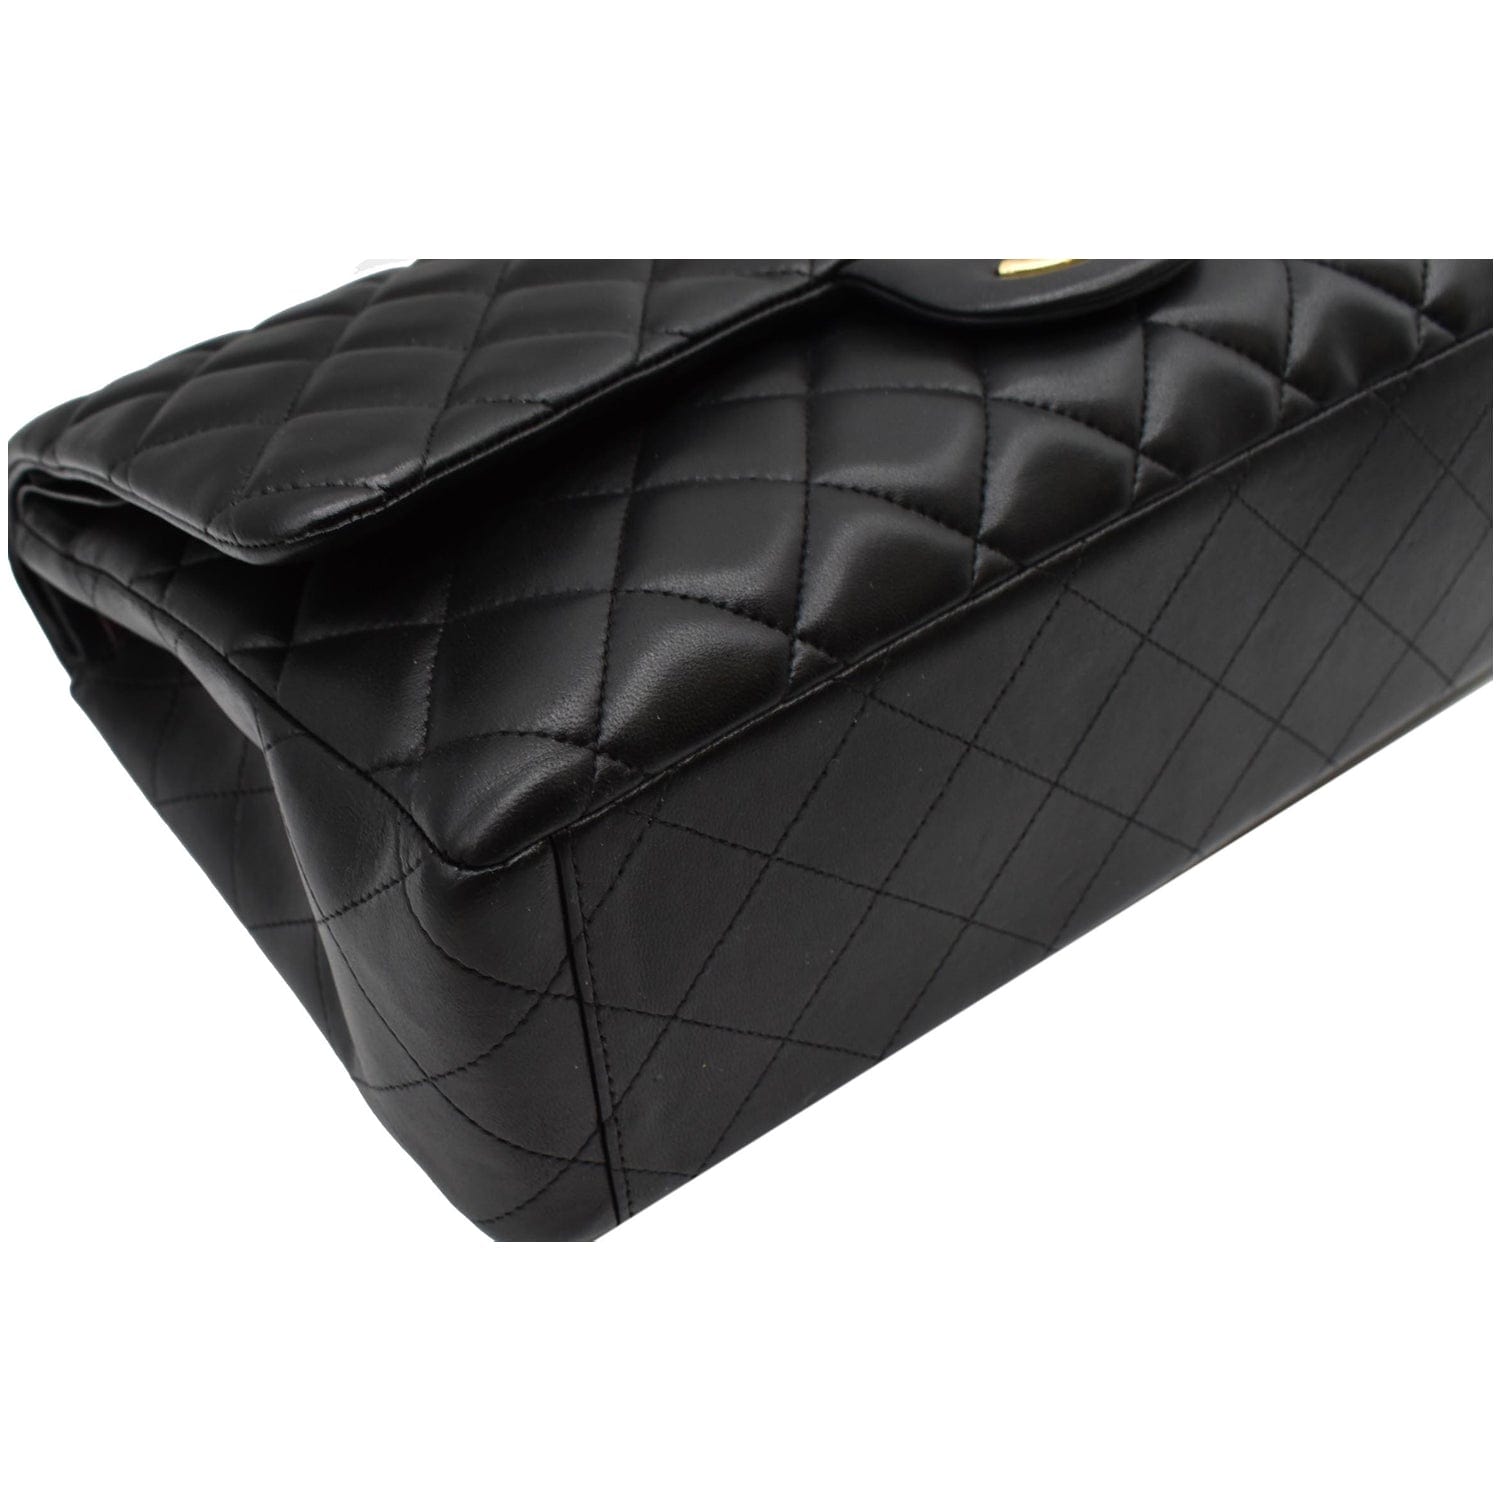 CHANEL Maxi Double Flap Lambskin Leather Shoulder Bag Black